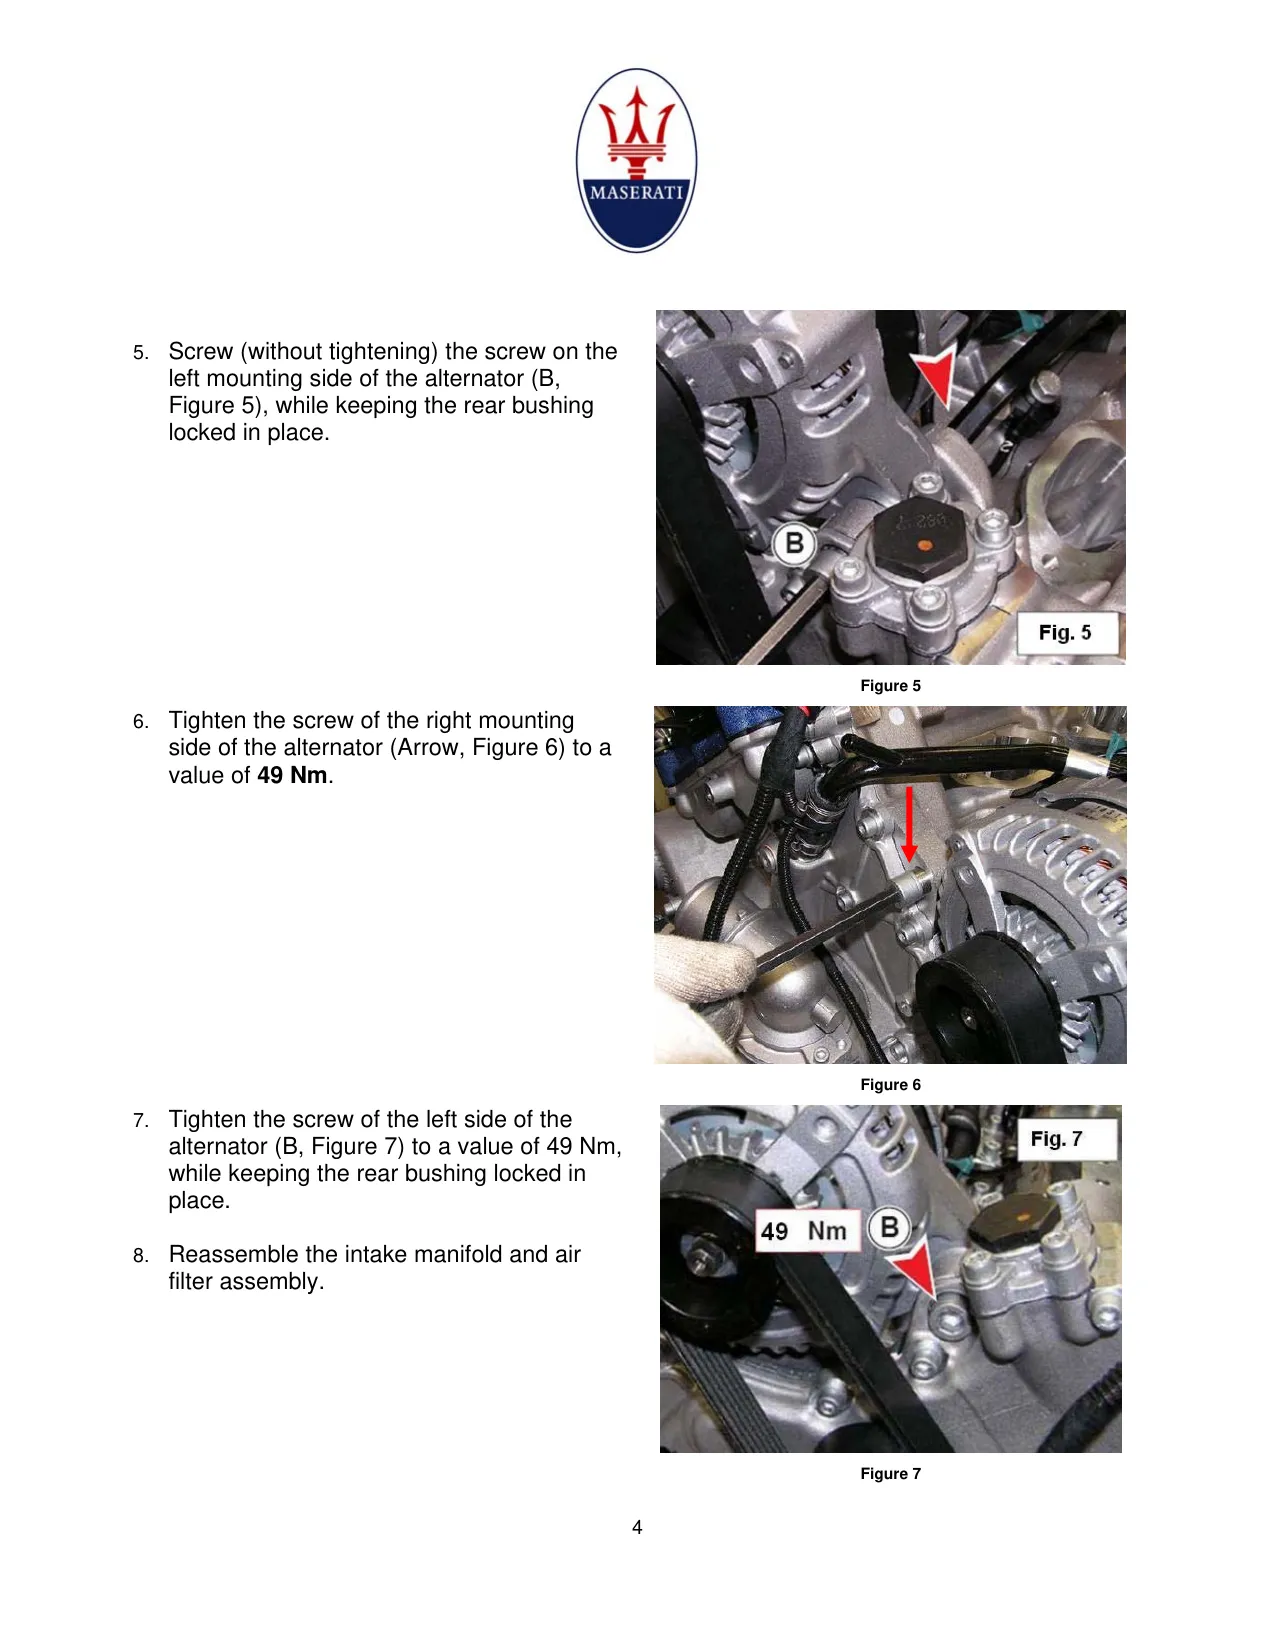 Maserati M138 Coupe Spyder repair manual Preview image 4